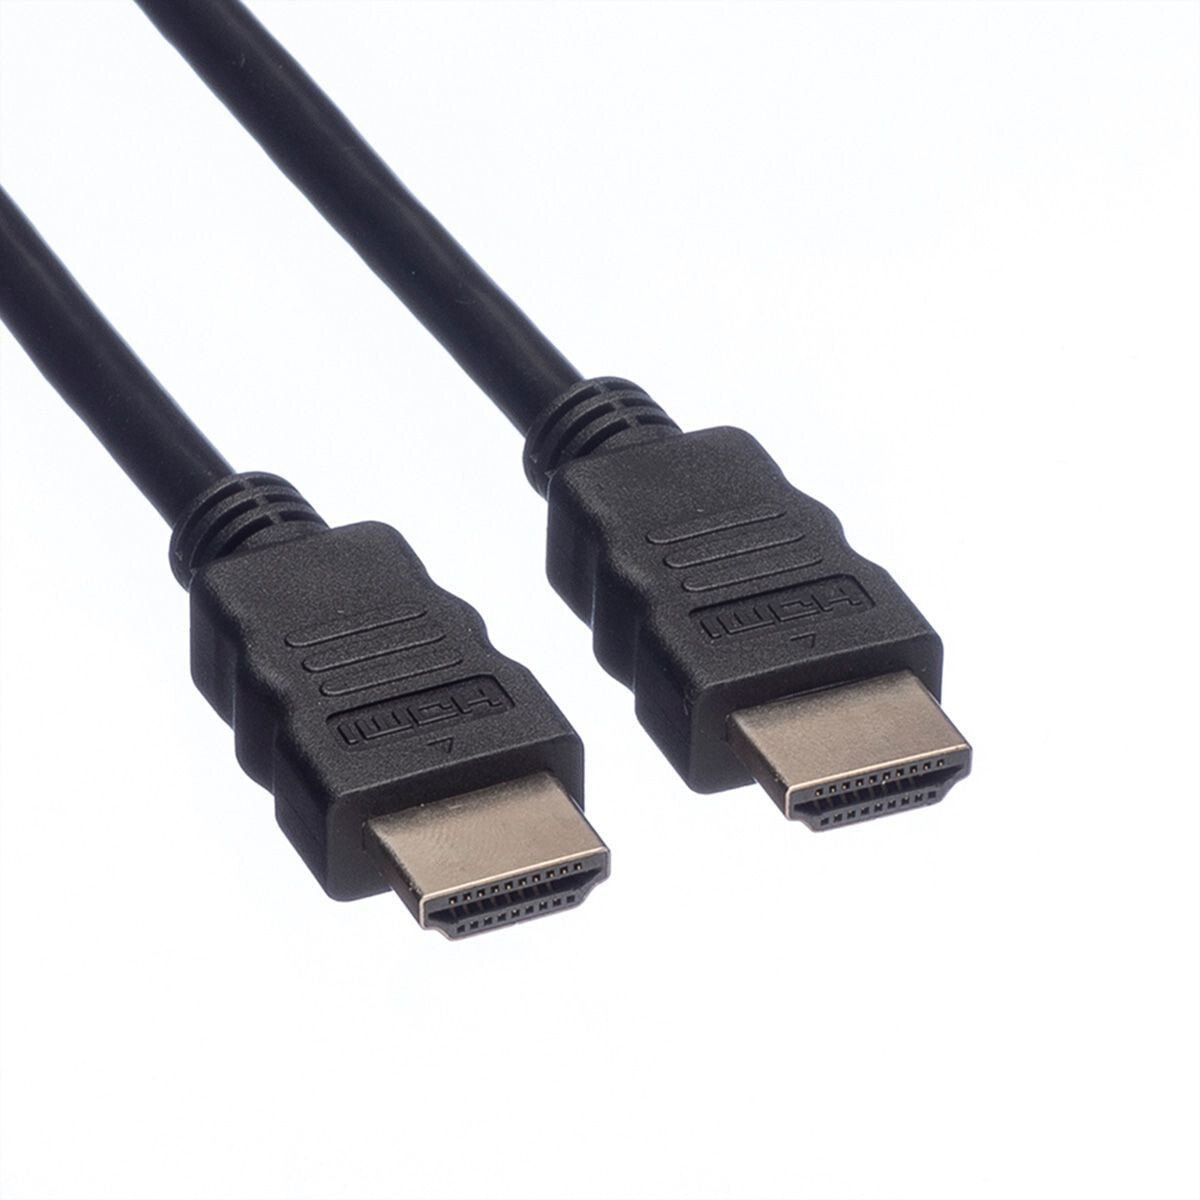 ROLINE 11.04.5932 HDMI кабель 2 m HDMI Тип A (Стандарт) Черный